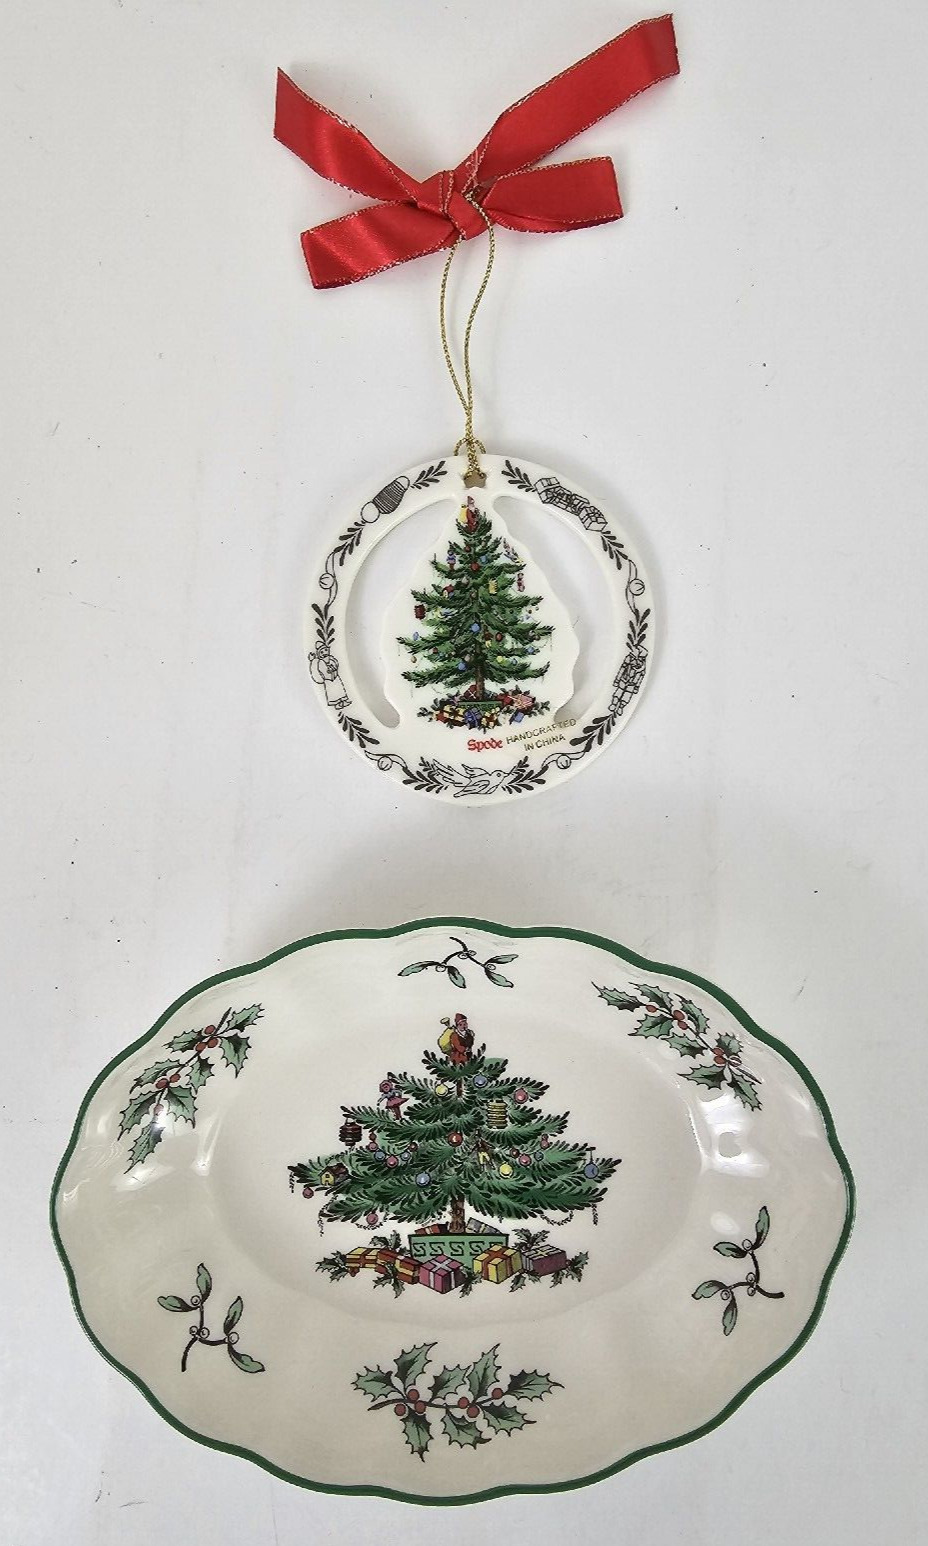 ❤️ 2 Vintage Spode Christmas Tree Items - 1 Ceramic Ornament - 1 Trinket Dish